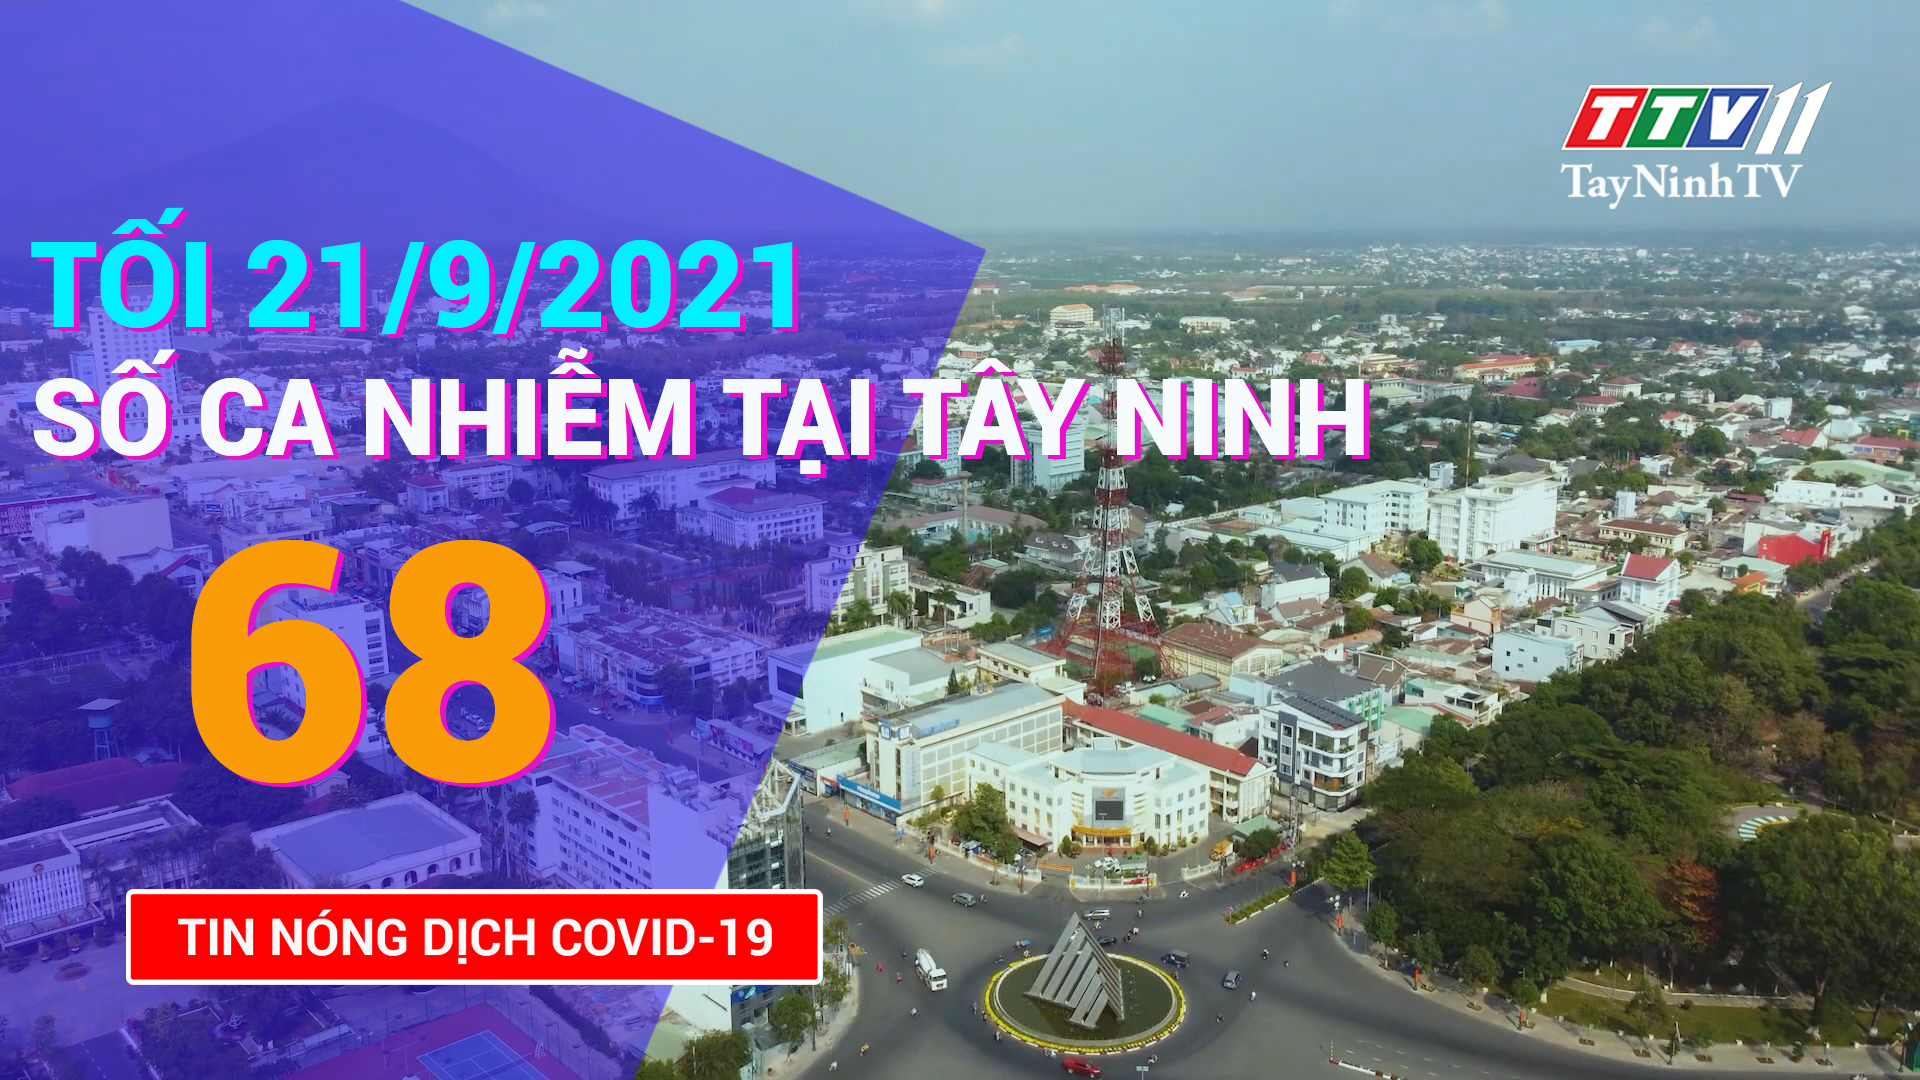 Tin tức Covid-19 tối 21/9/2021 | TayNinhTV